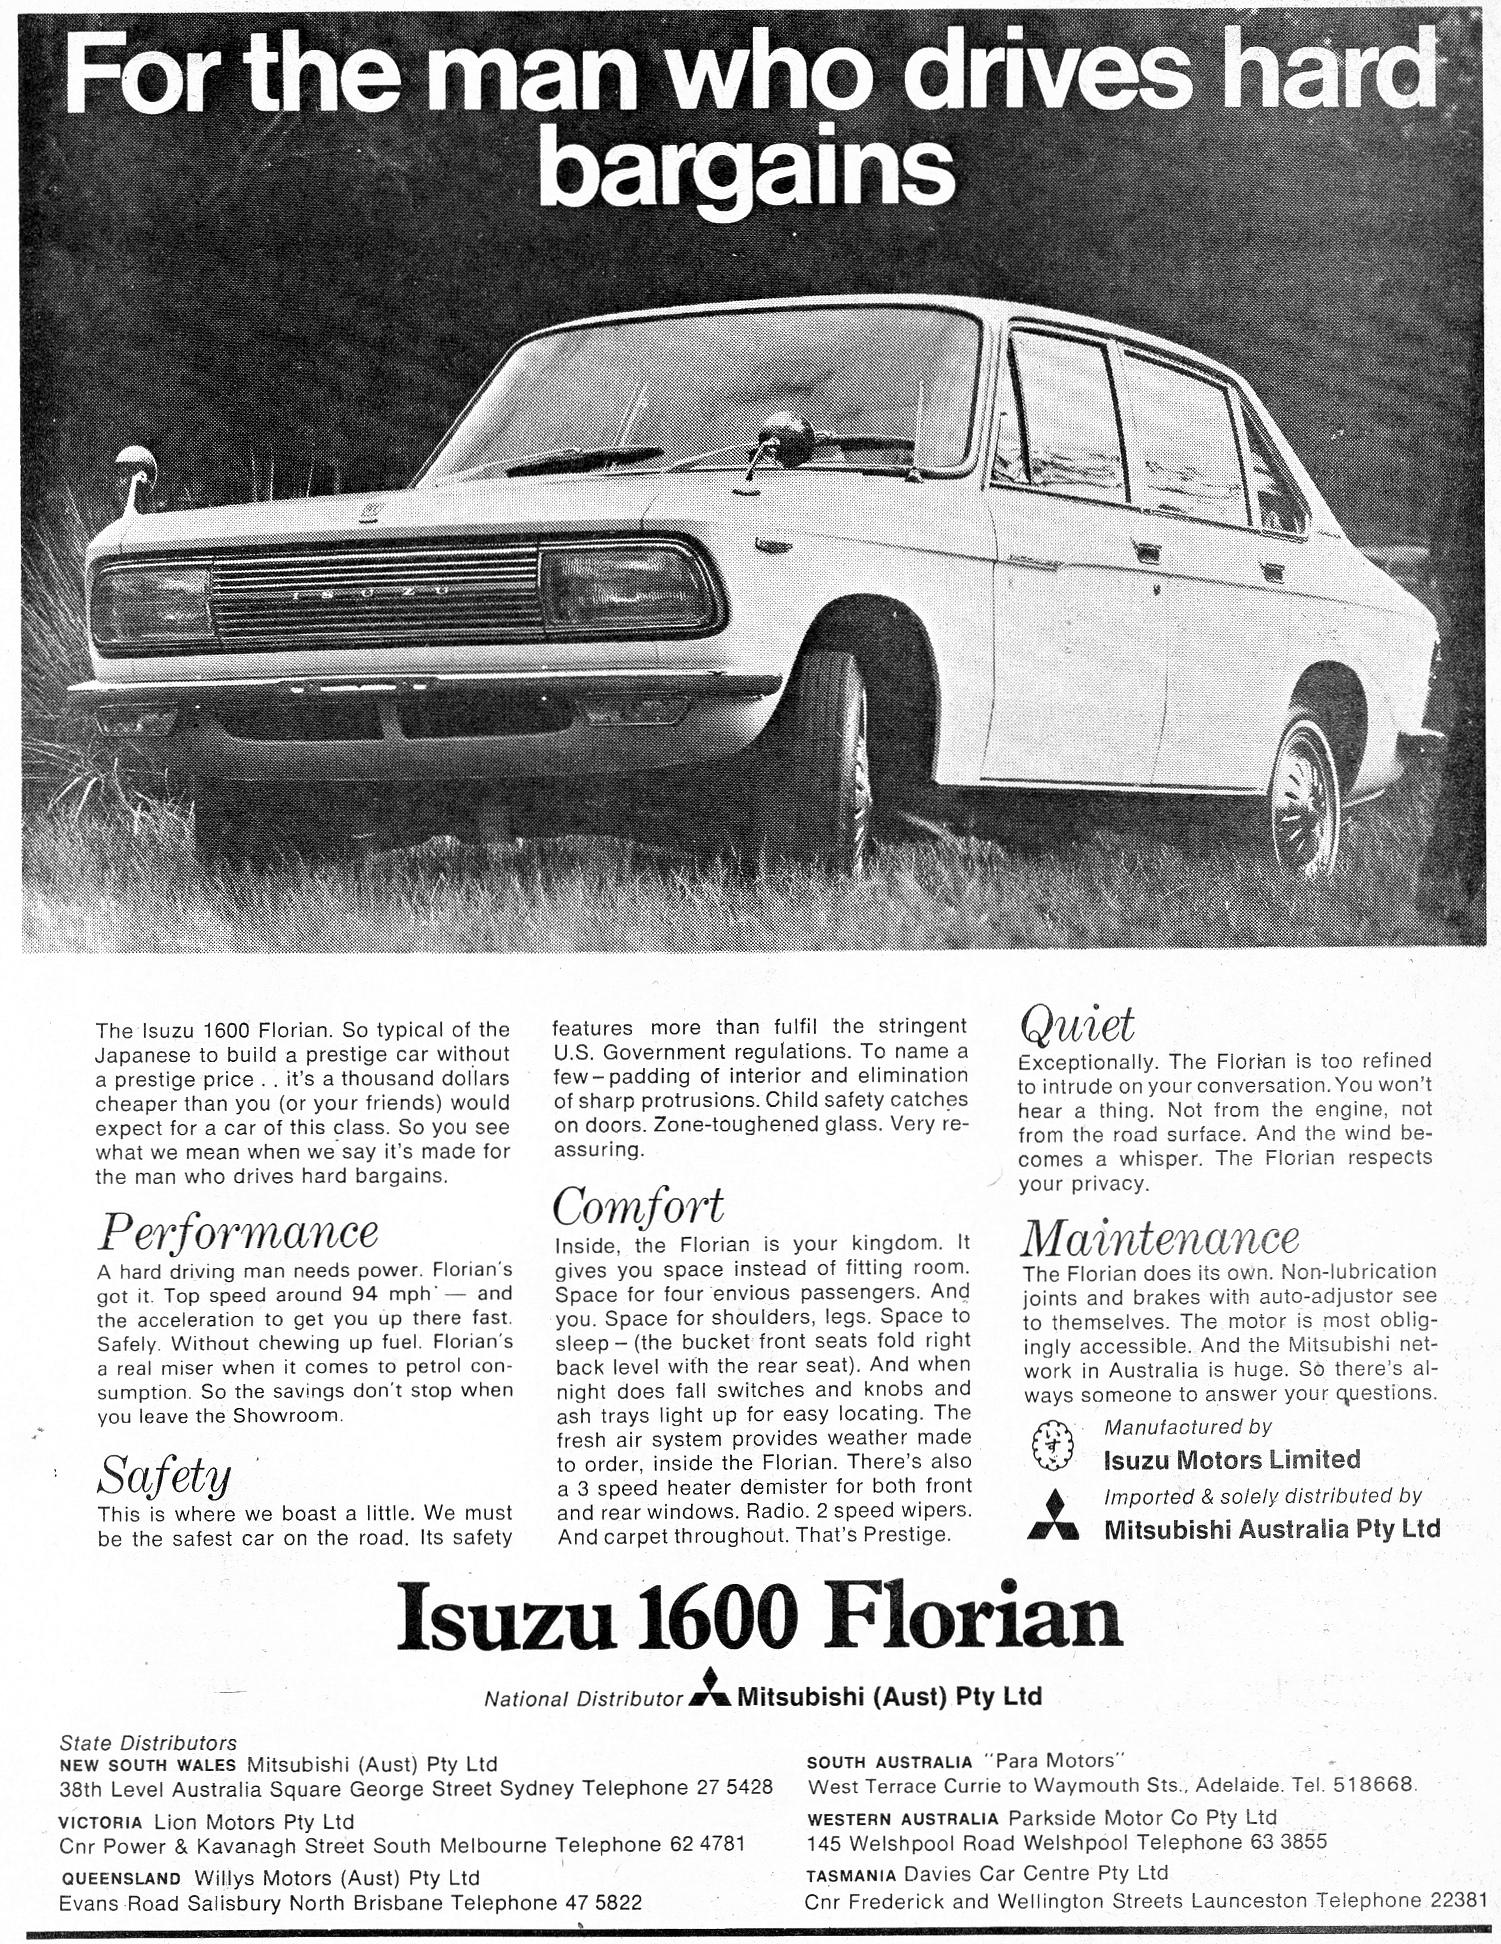 1970 Isuzu 1600 Florian Sedan